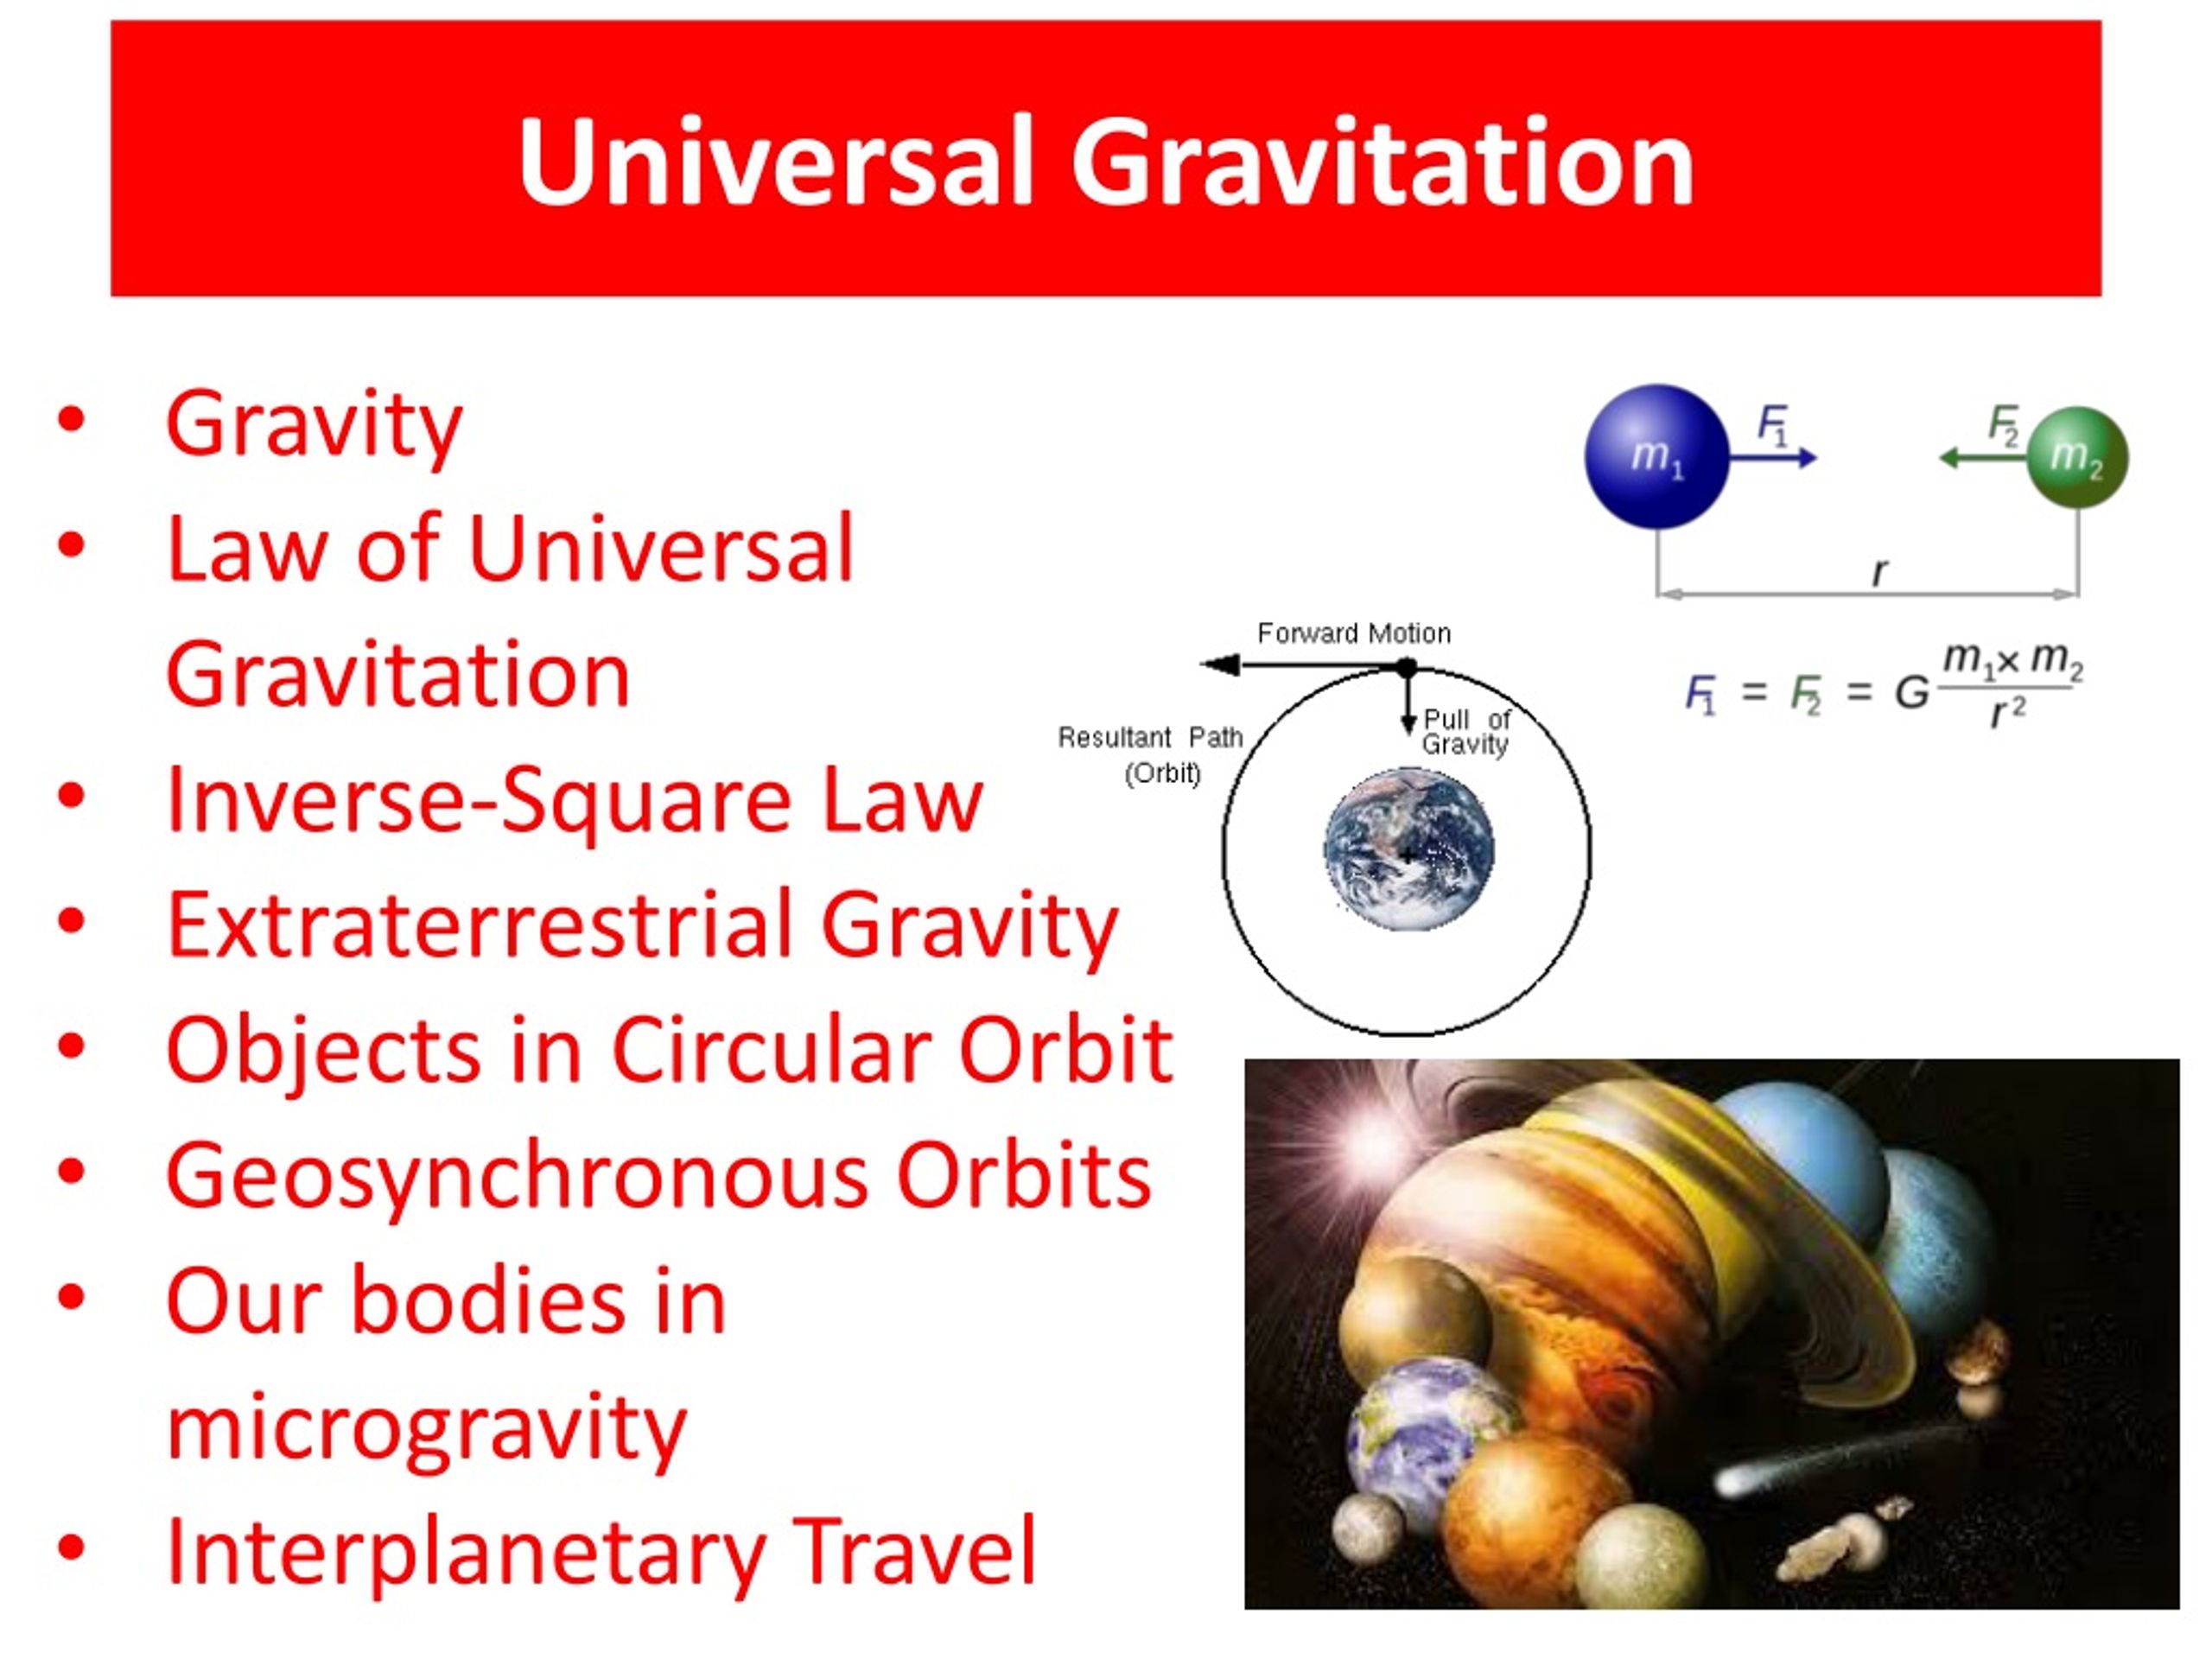 Ppt Universal Gravitation Powerpoint Presentation Free Download Id657284 5504